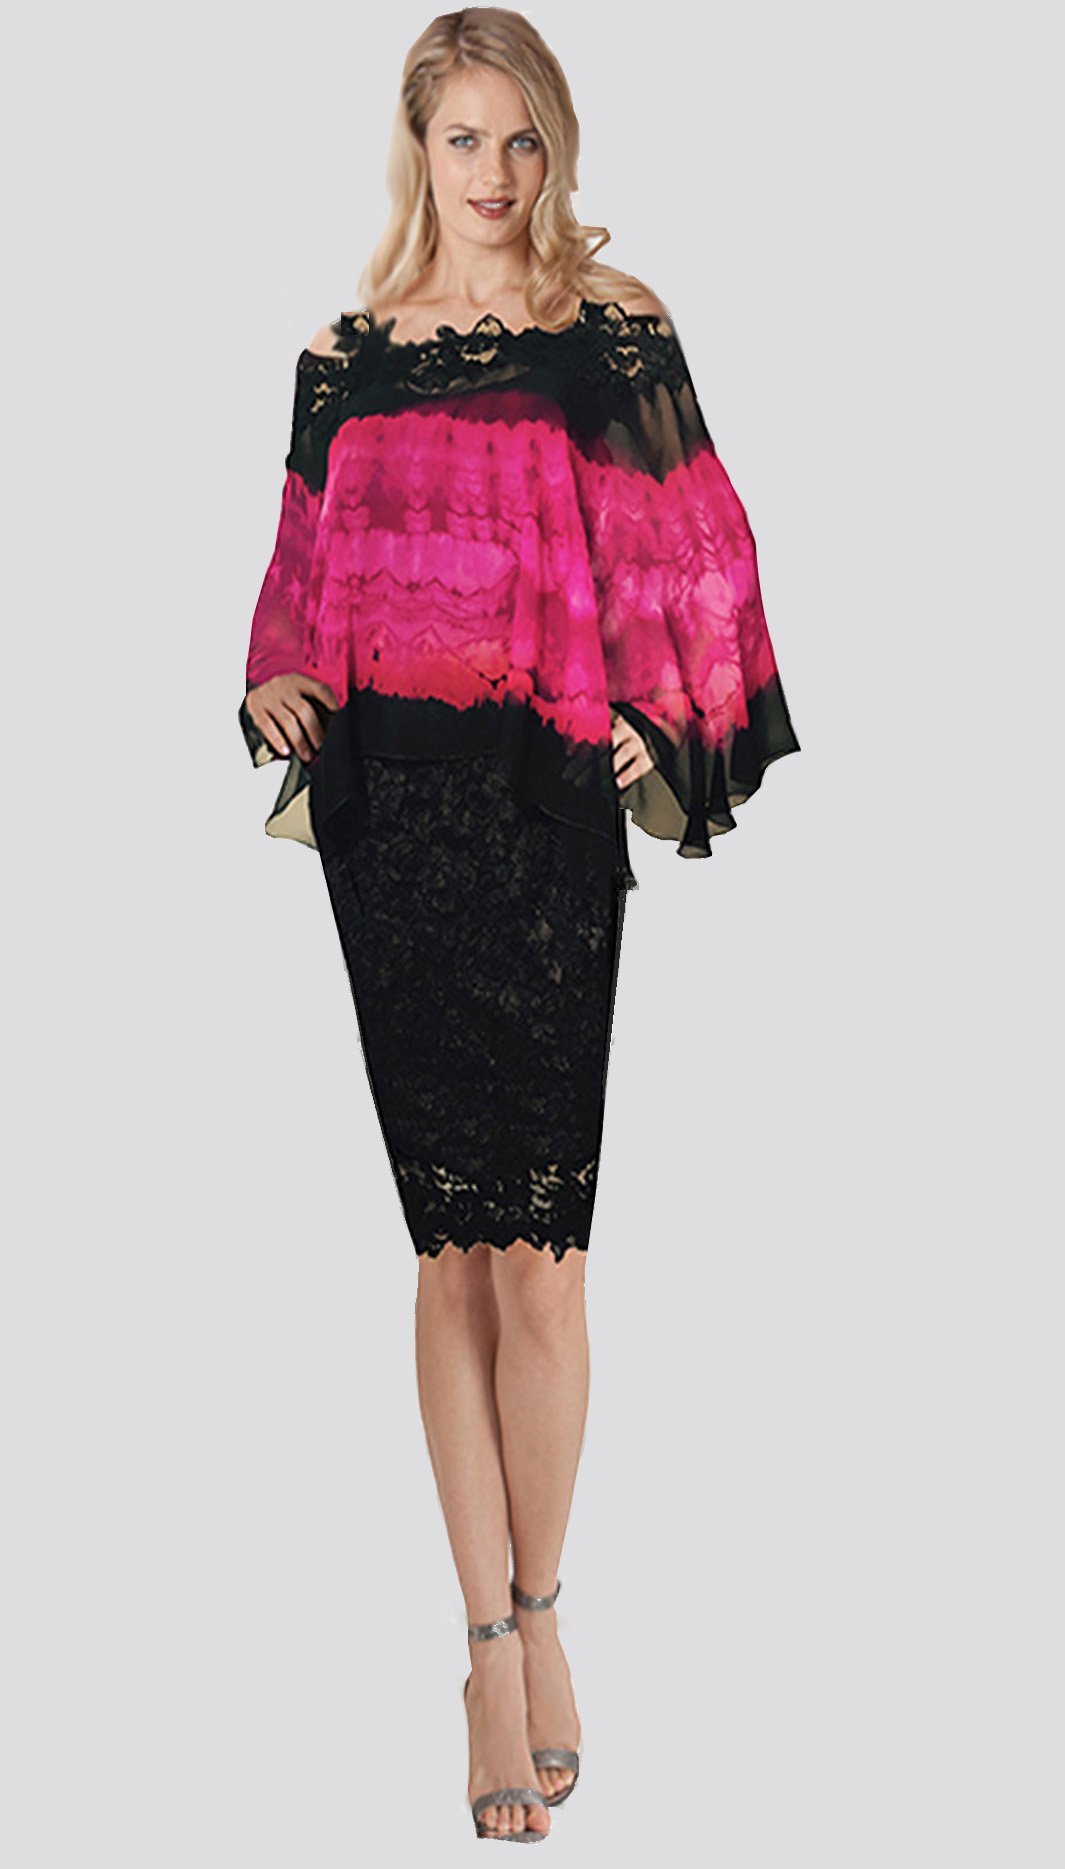 Silk Plisse' Multi Wear Float & French Lace Sleeveless Dress - Sara Mique Evening Wear